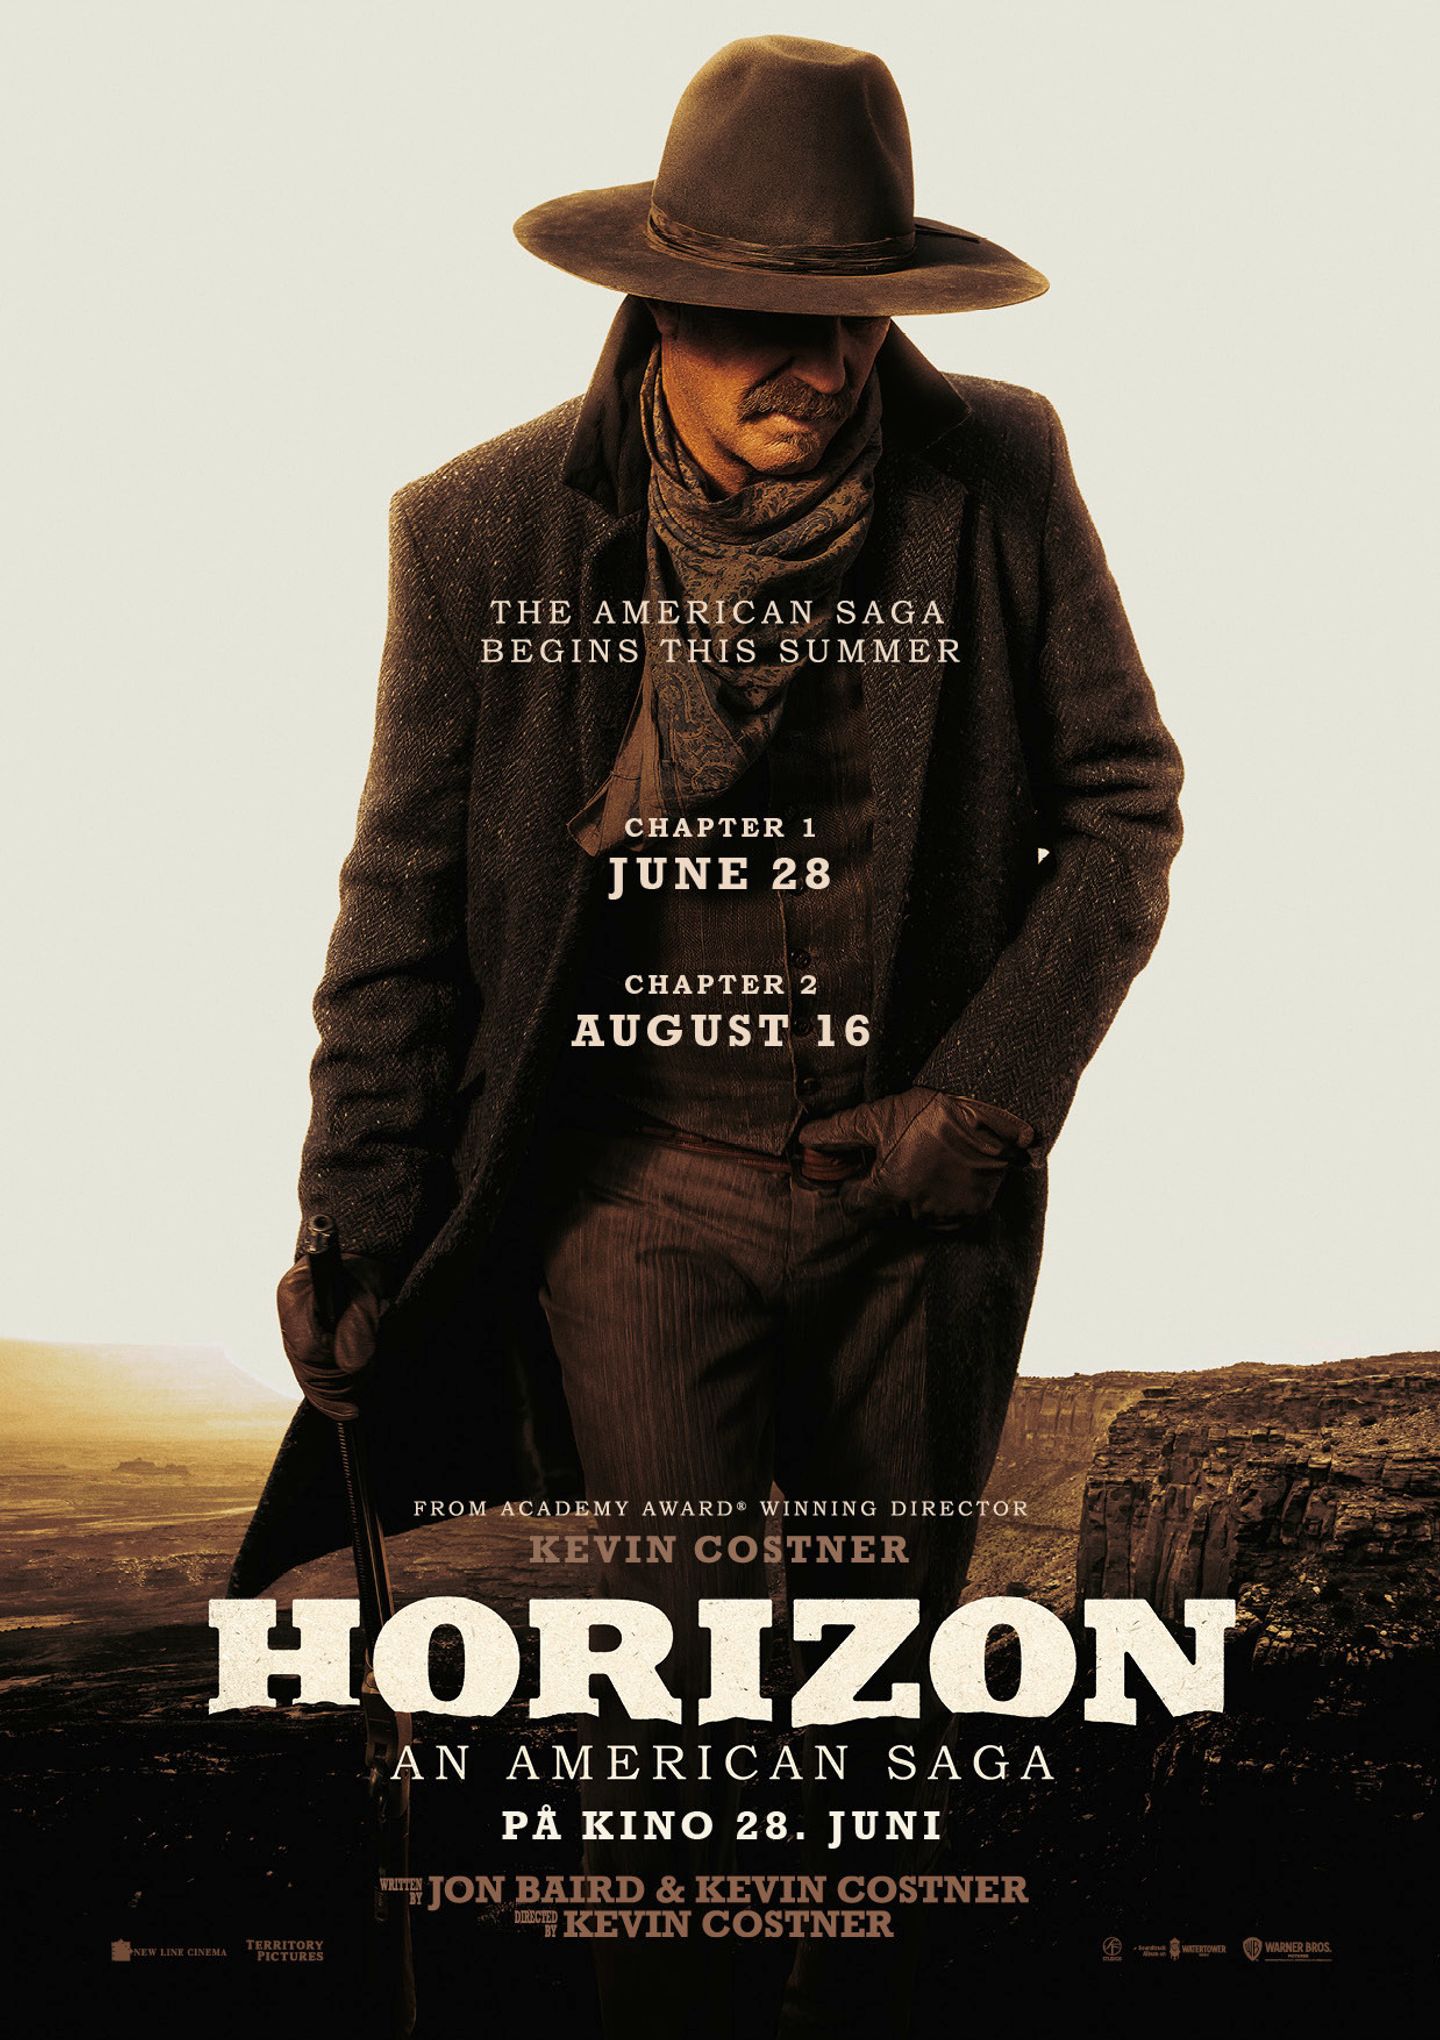 Plakat for 'Horizon: An American Saga - Chapter 1'